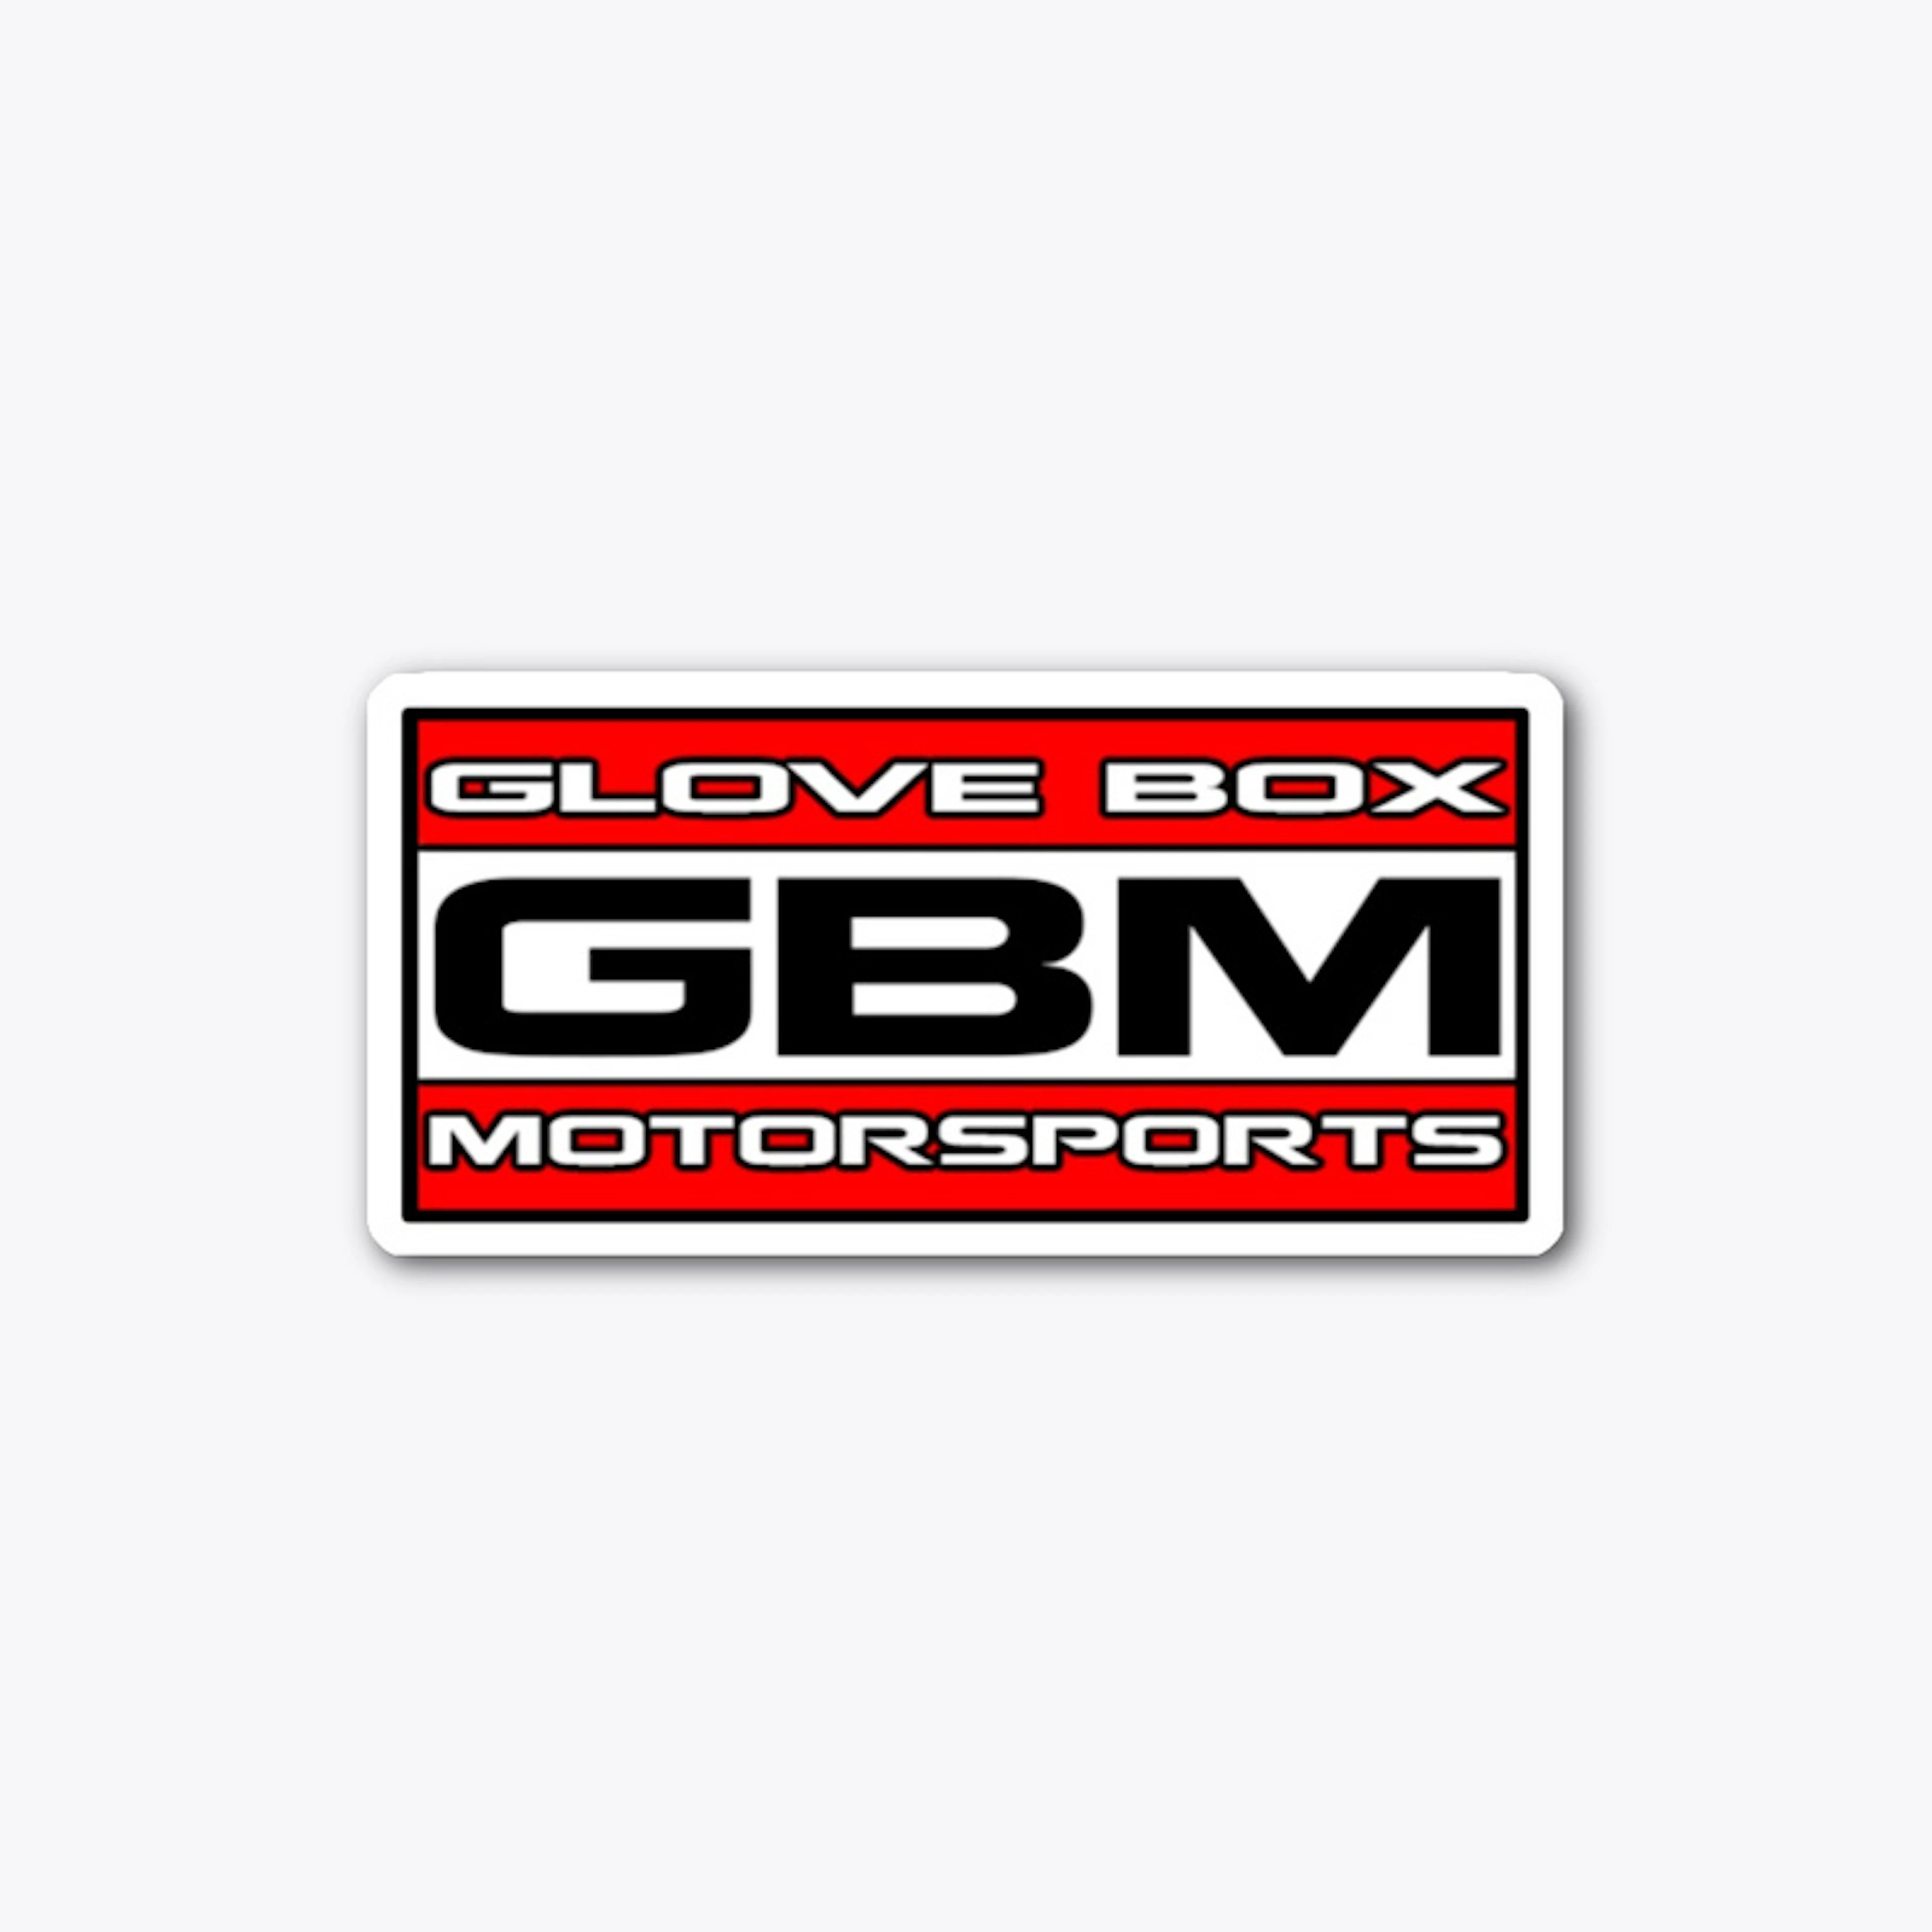 Glove Box Motorsports